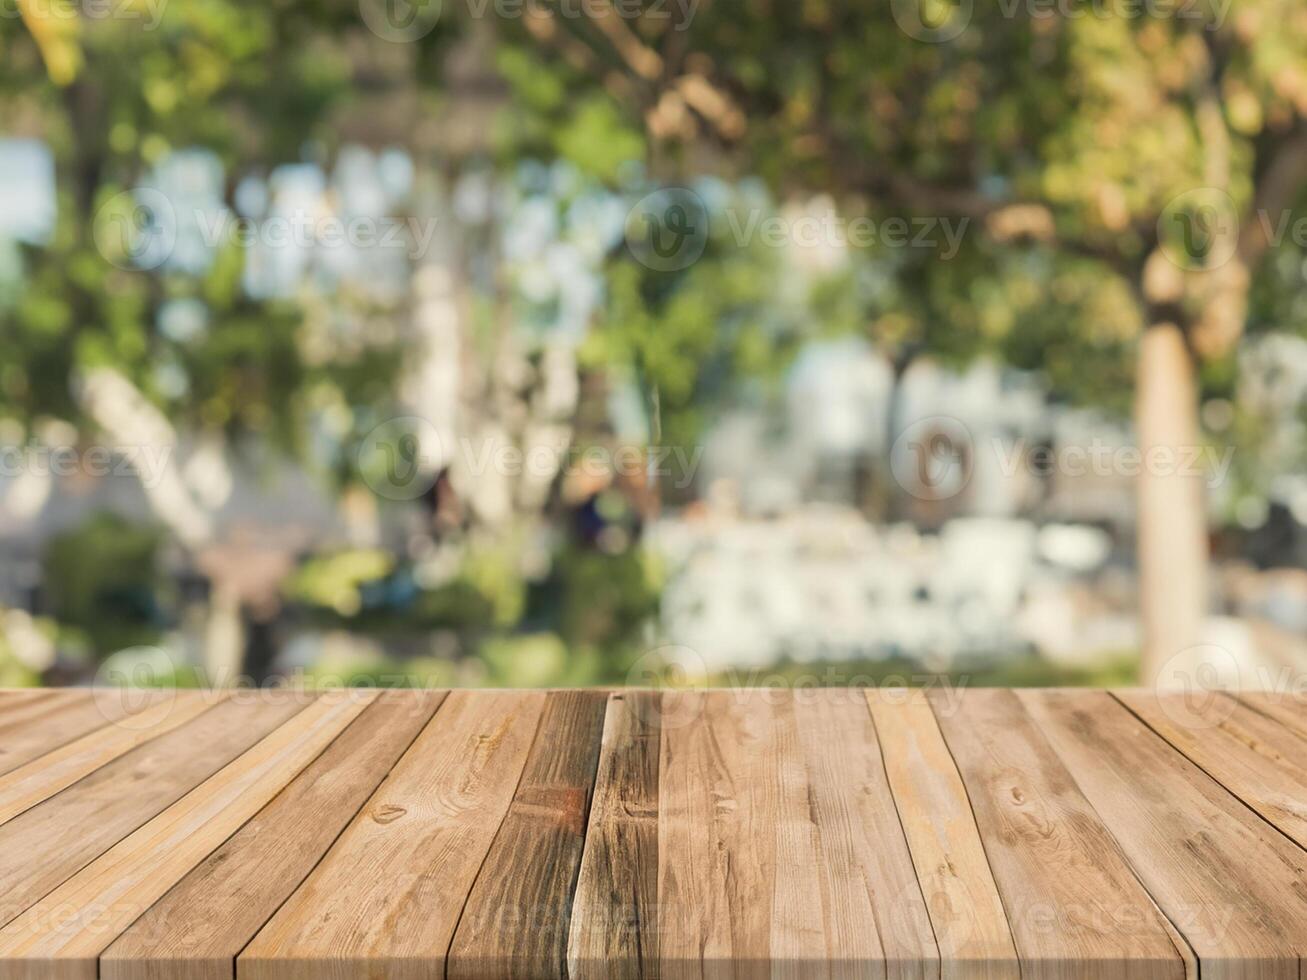 de madera tablero vacío mesa parte superior en de borroso antecedentes. perspectiva marrón madera mesa terminado difuminar en café tienda antecedentes - lata ser usado burlarse de arriba para montaje productos monitor o diseño llave visual disposición. foto